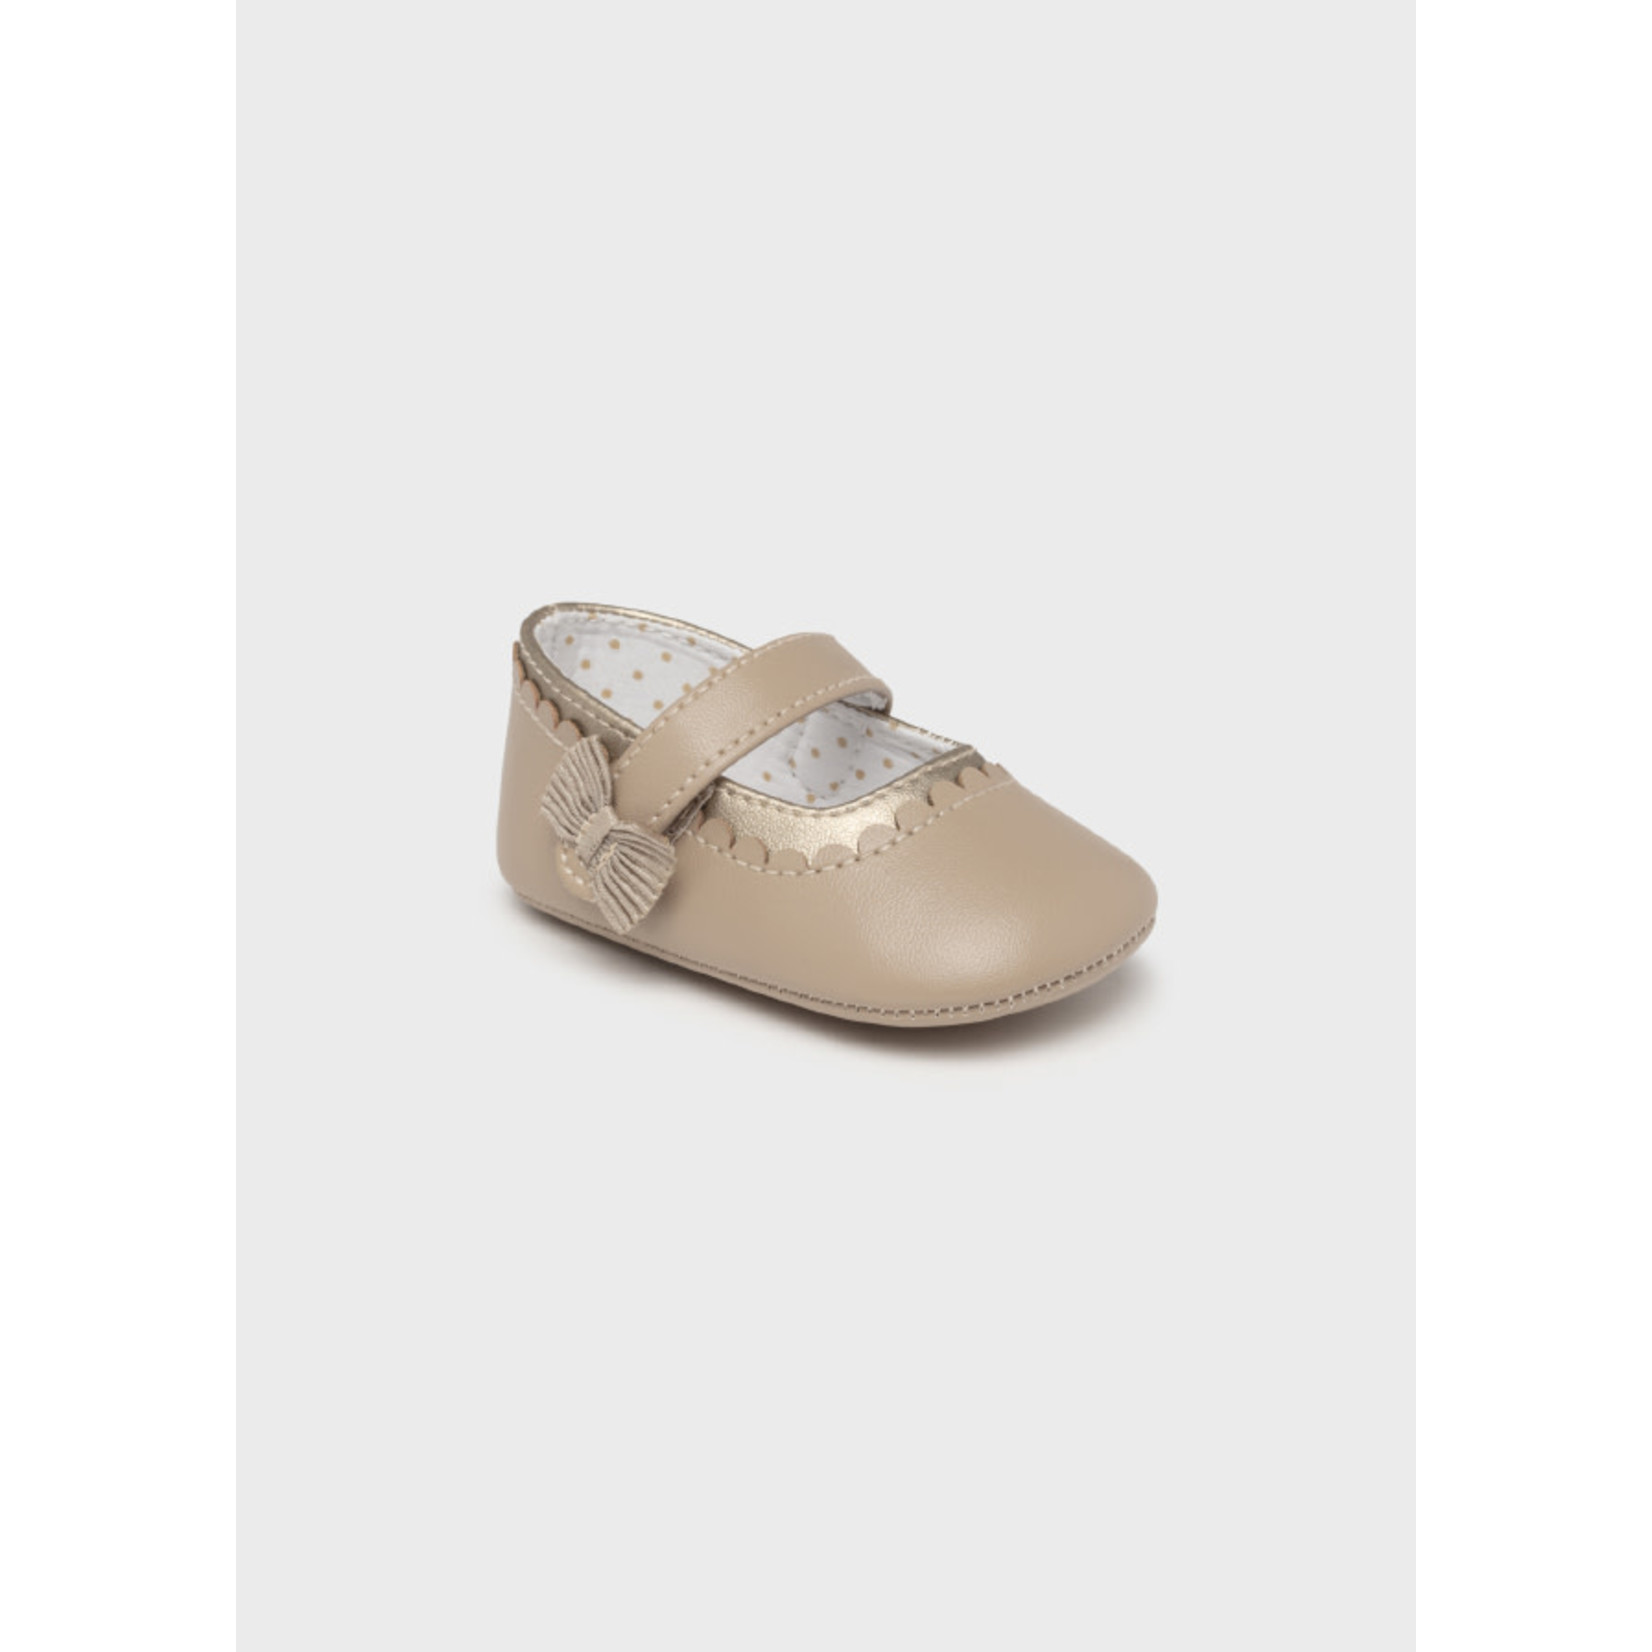 Mayoral Mayoral- Newborn- Infant Girl Mary Jane Shoes